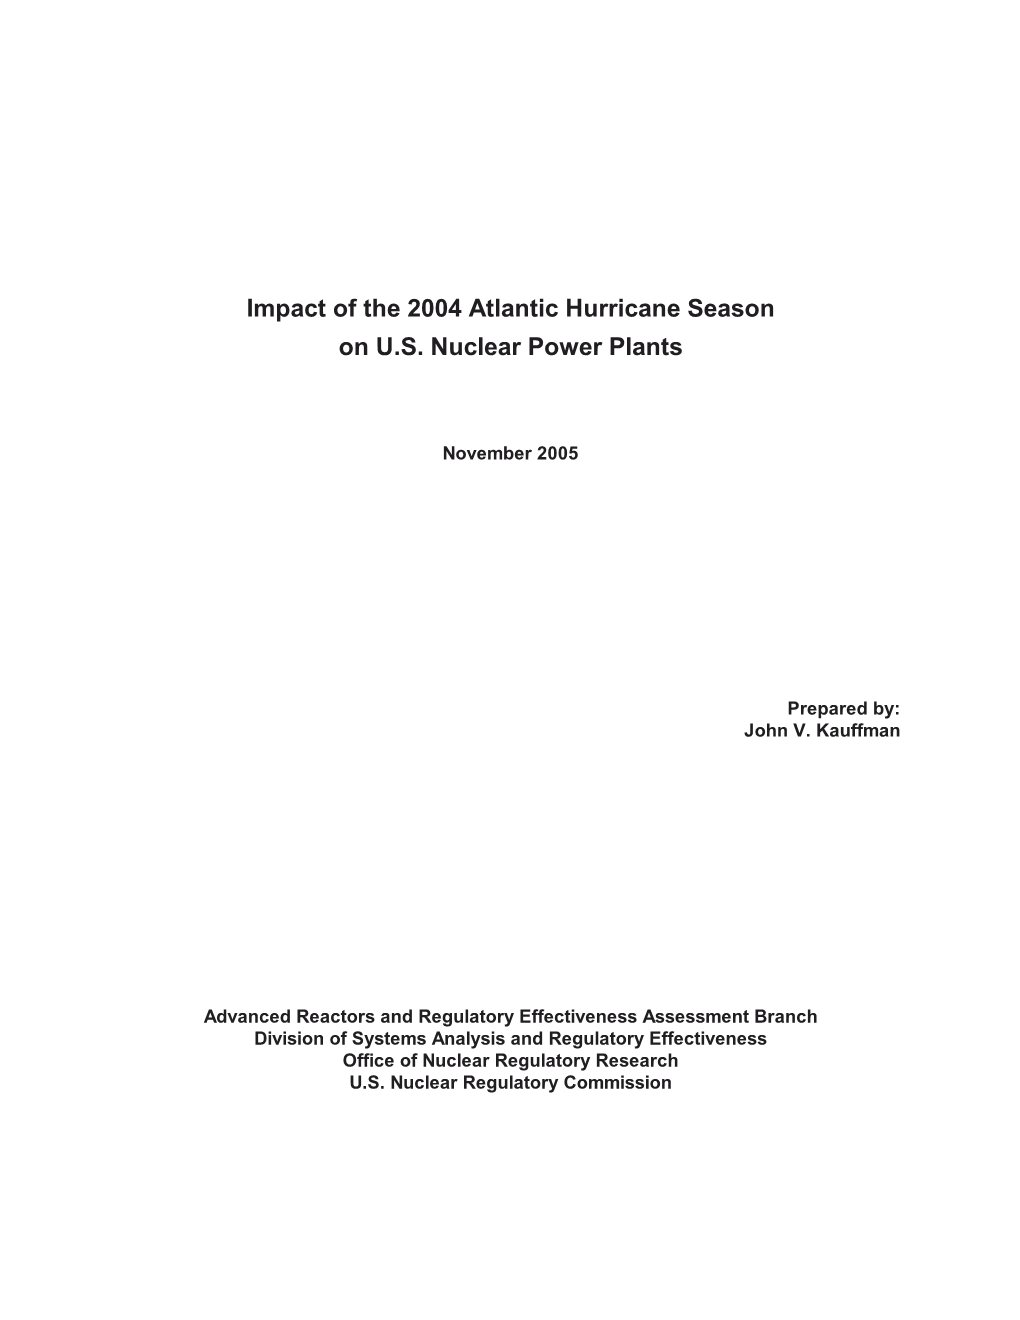 Impact of the 2004 Atlantic Hurricane Season on US Nuclear Power Plants